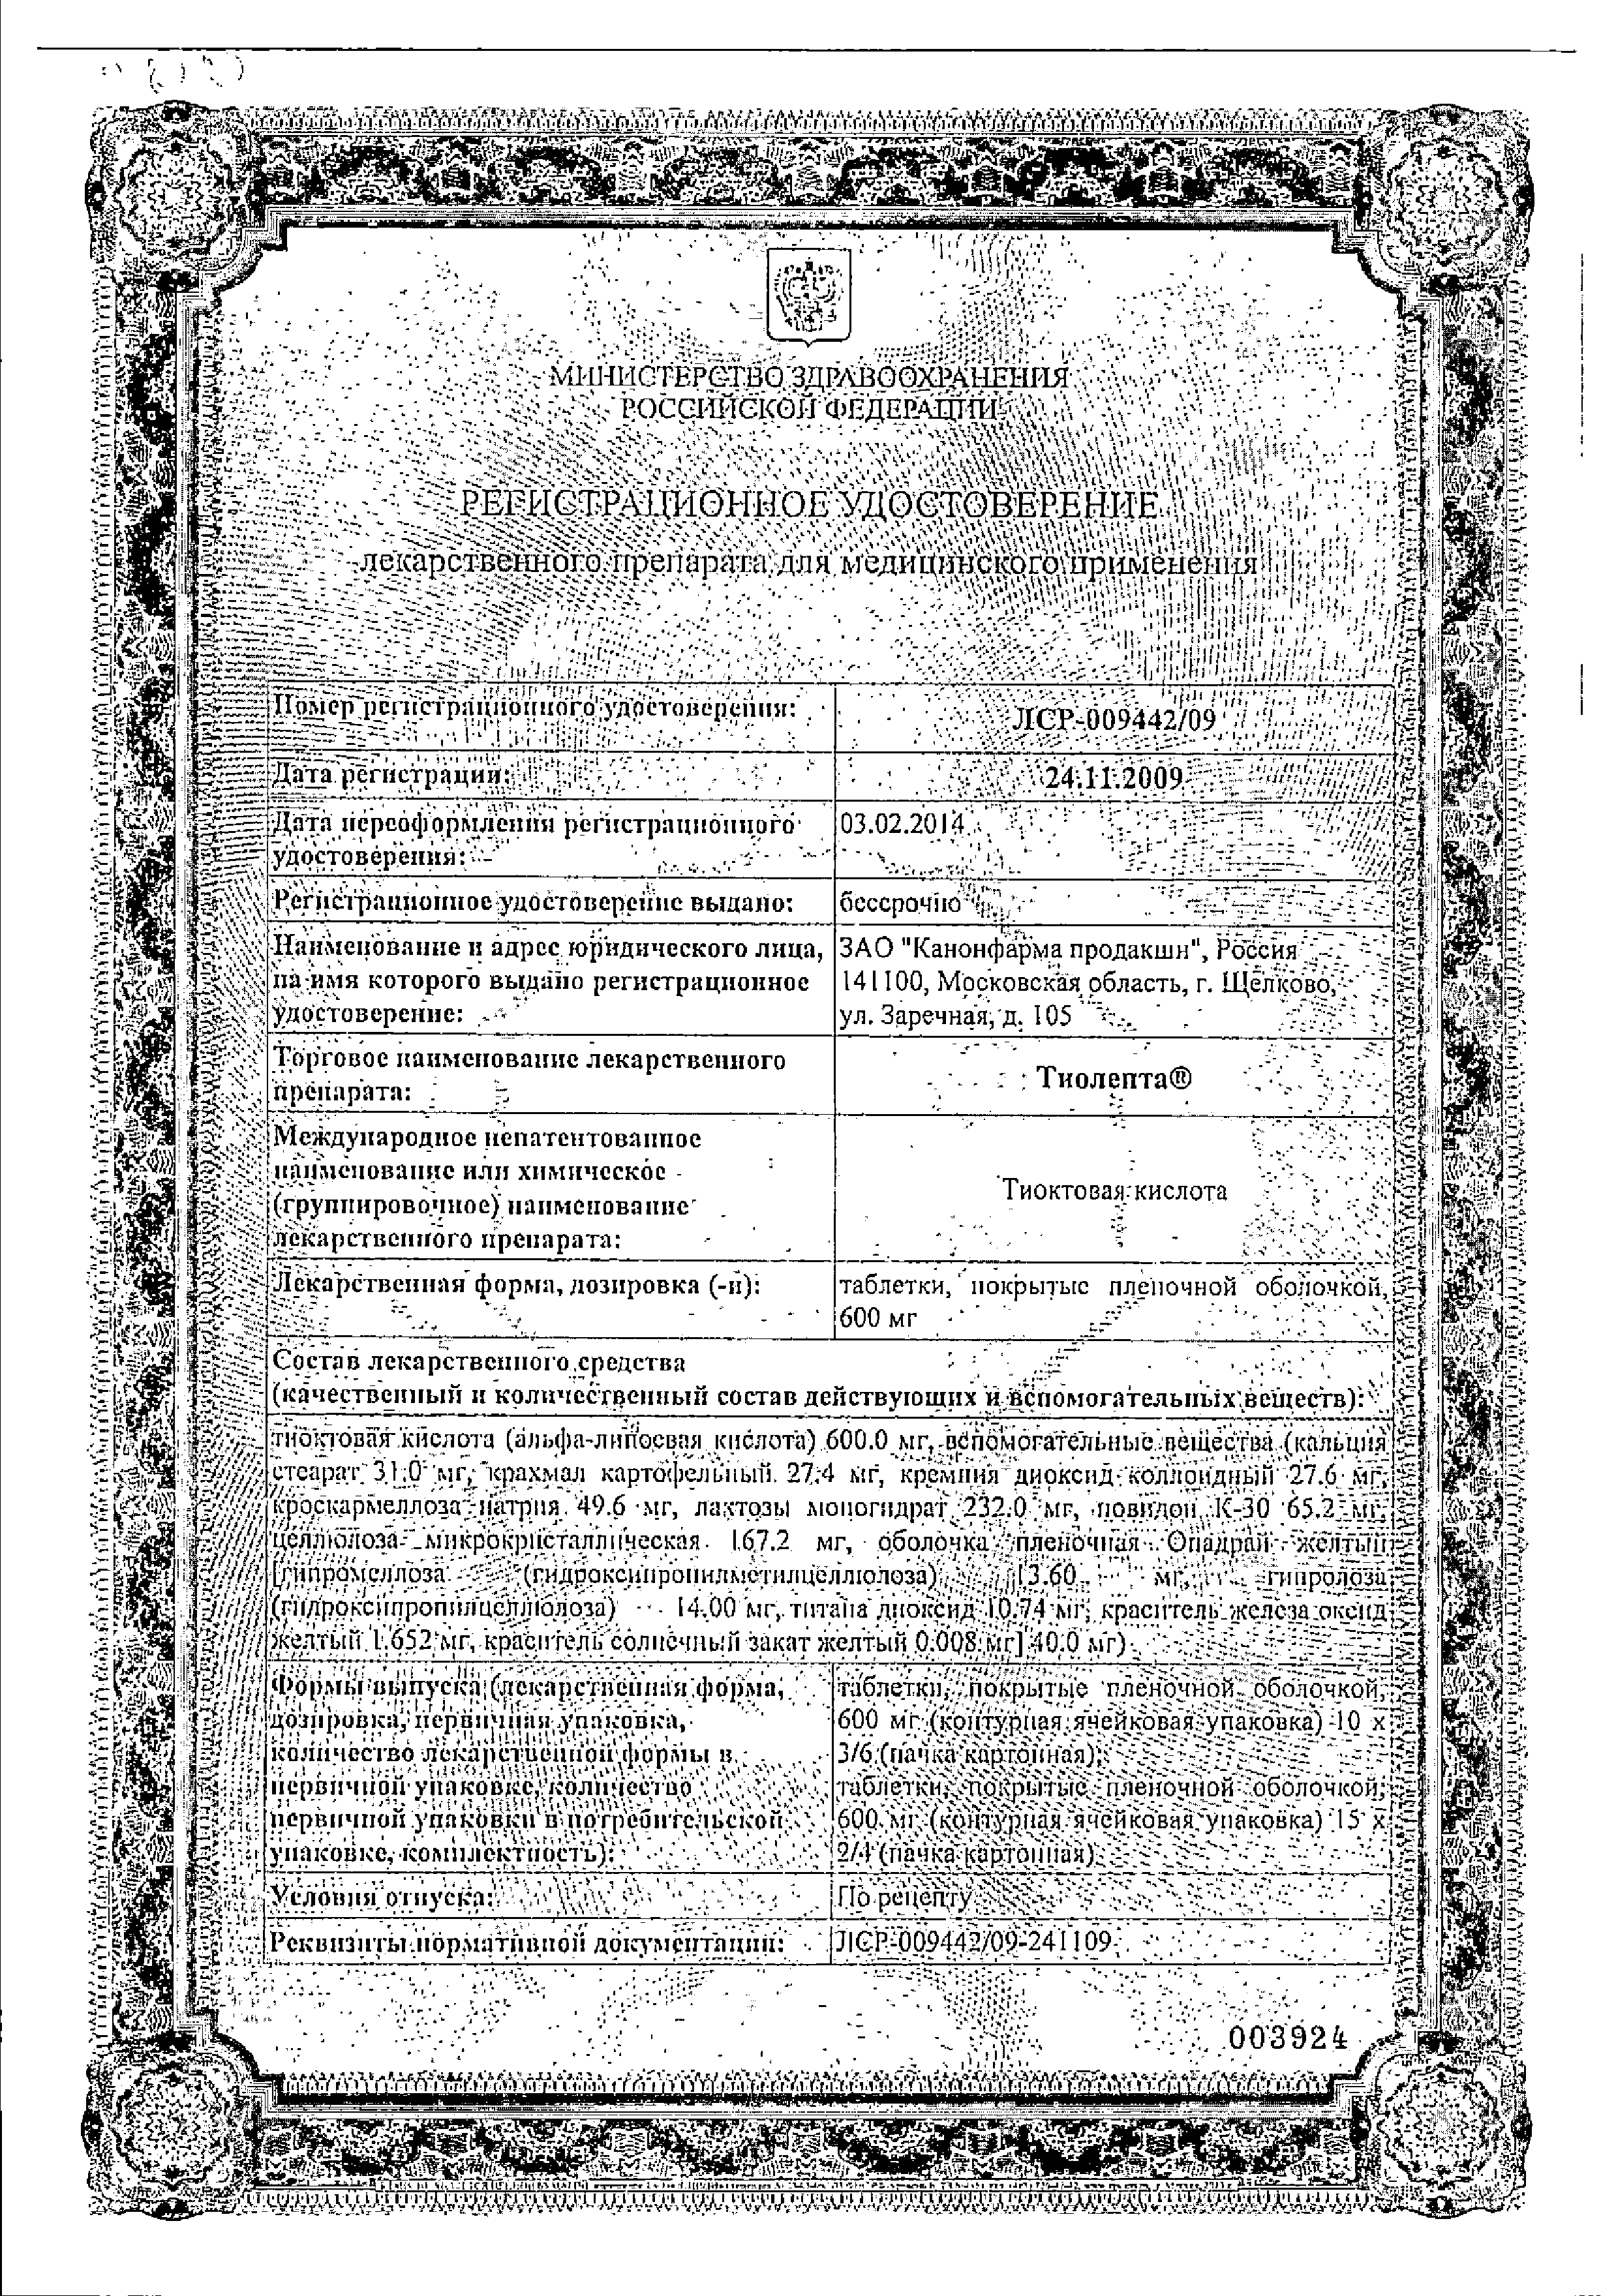 Тиолепта сертификат